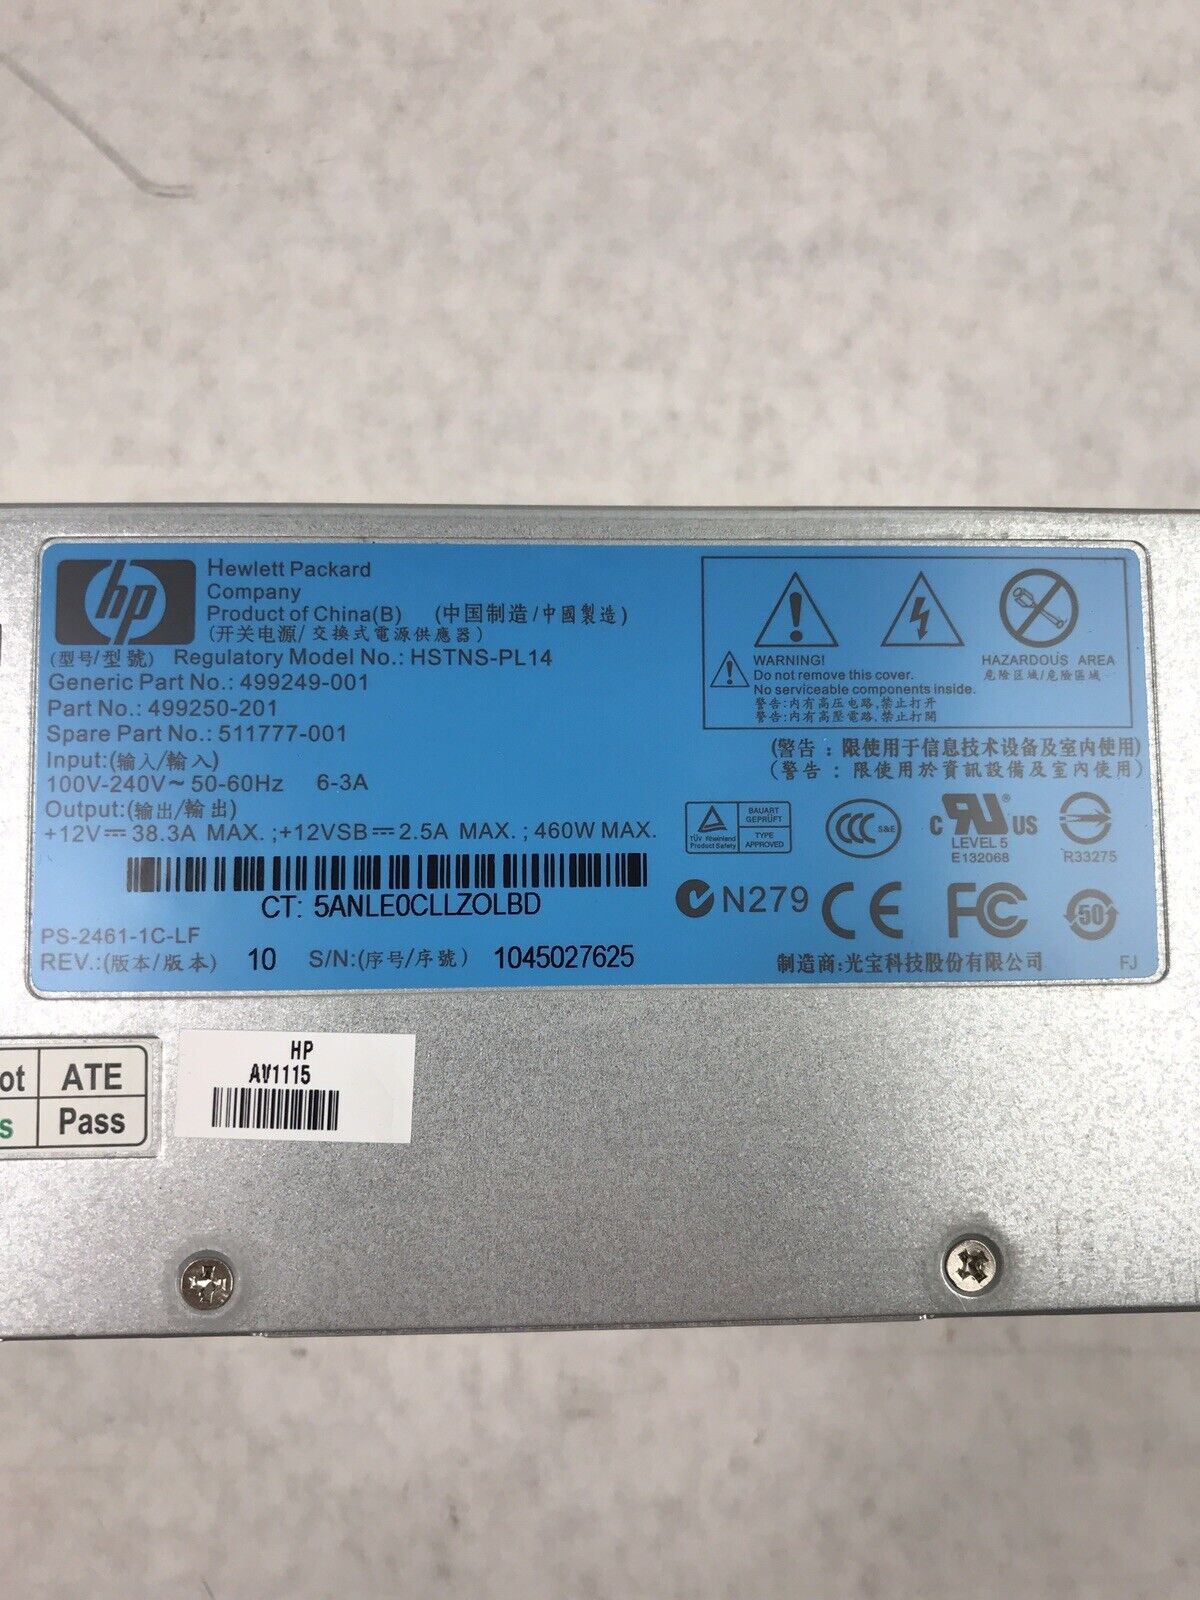 (Lot of 2) Hewlett Packard HSTNS-PL14 240V 60Hz 460W Power Supply 499250-201